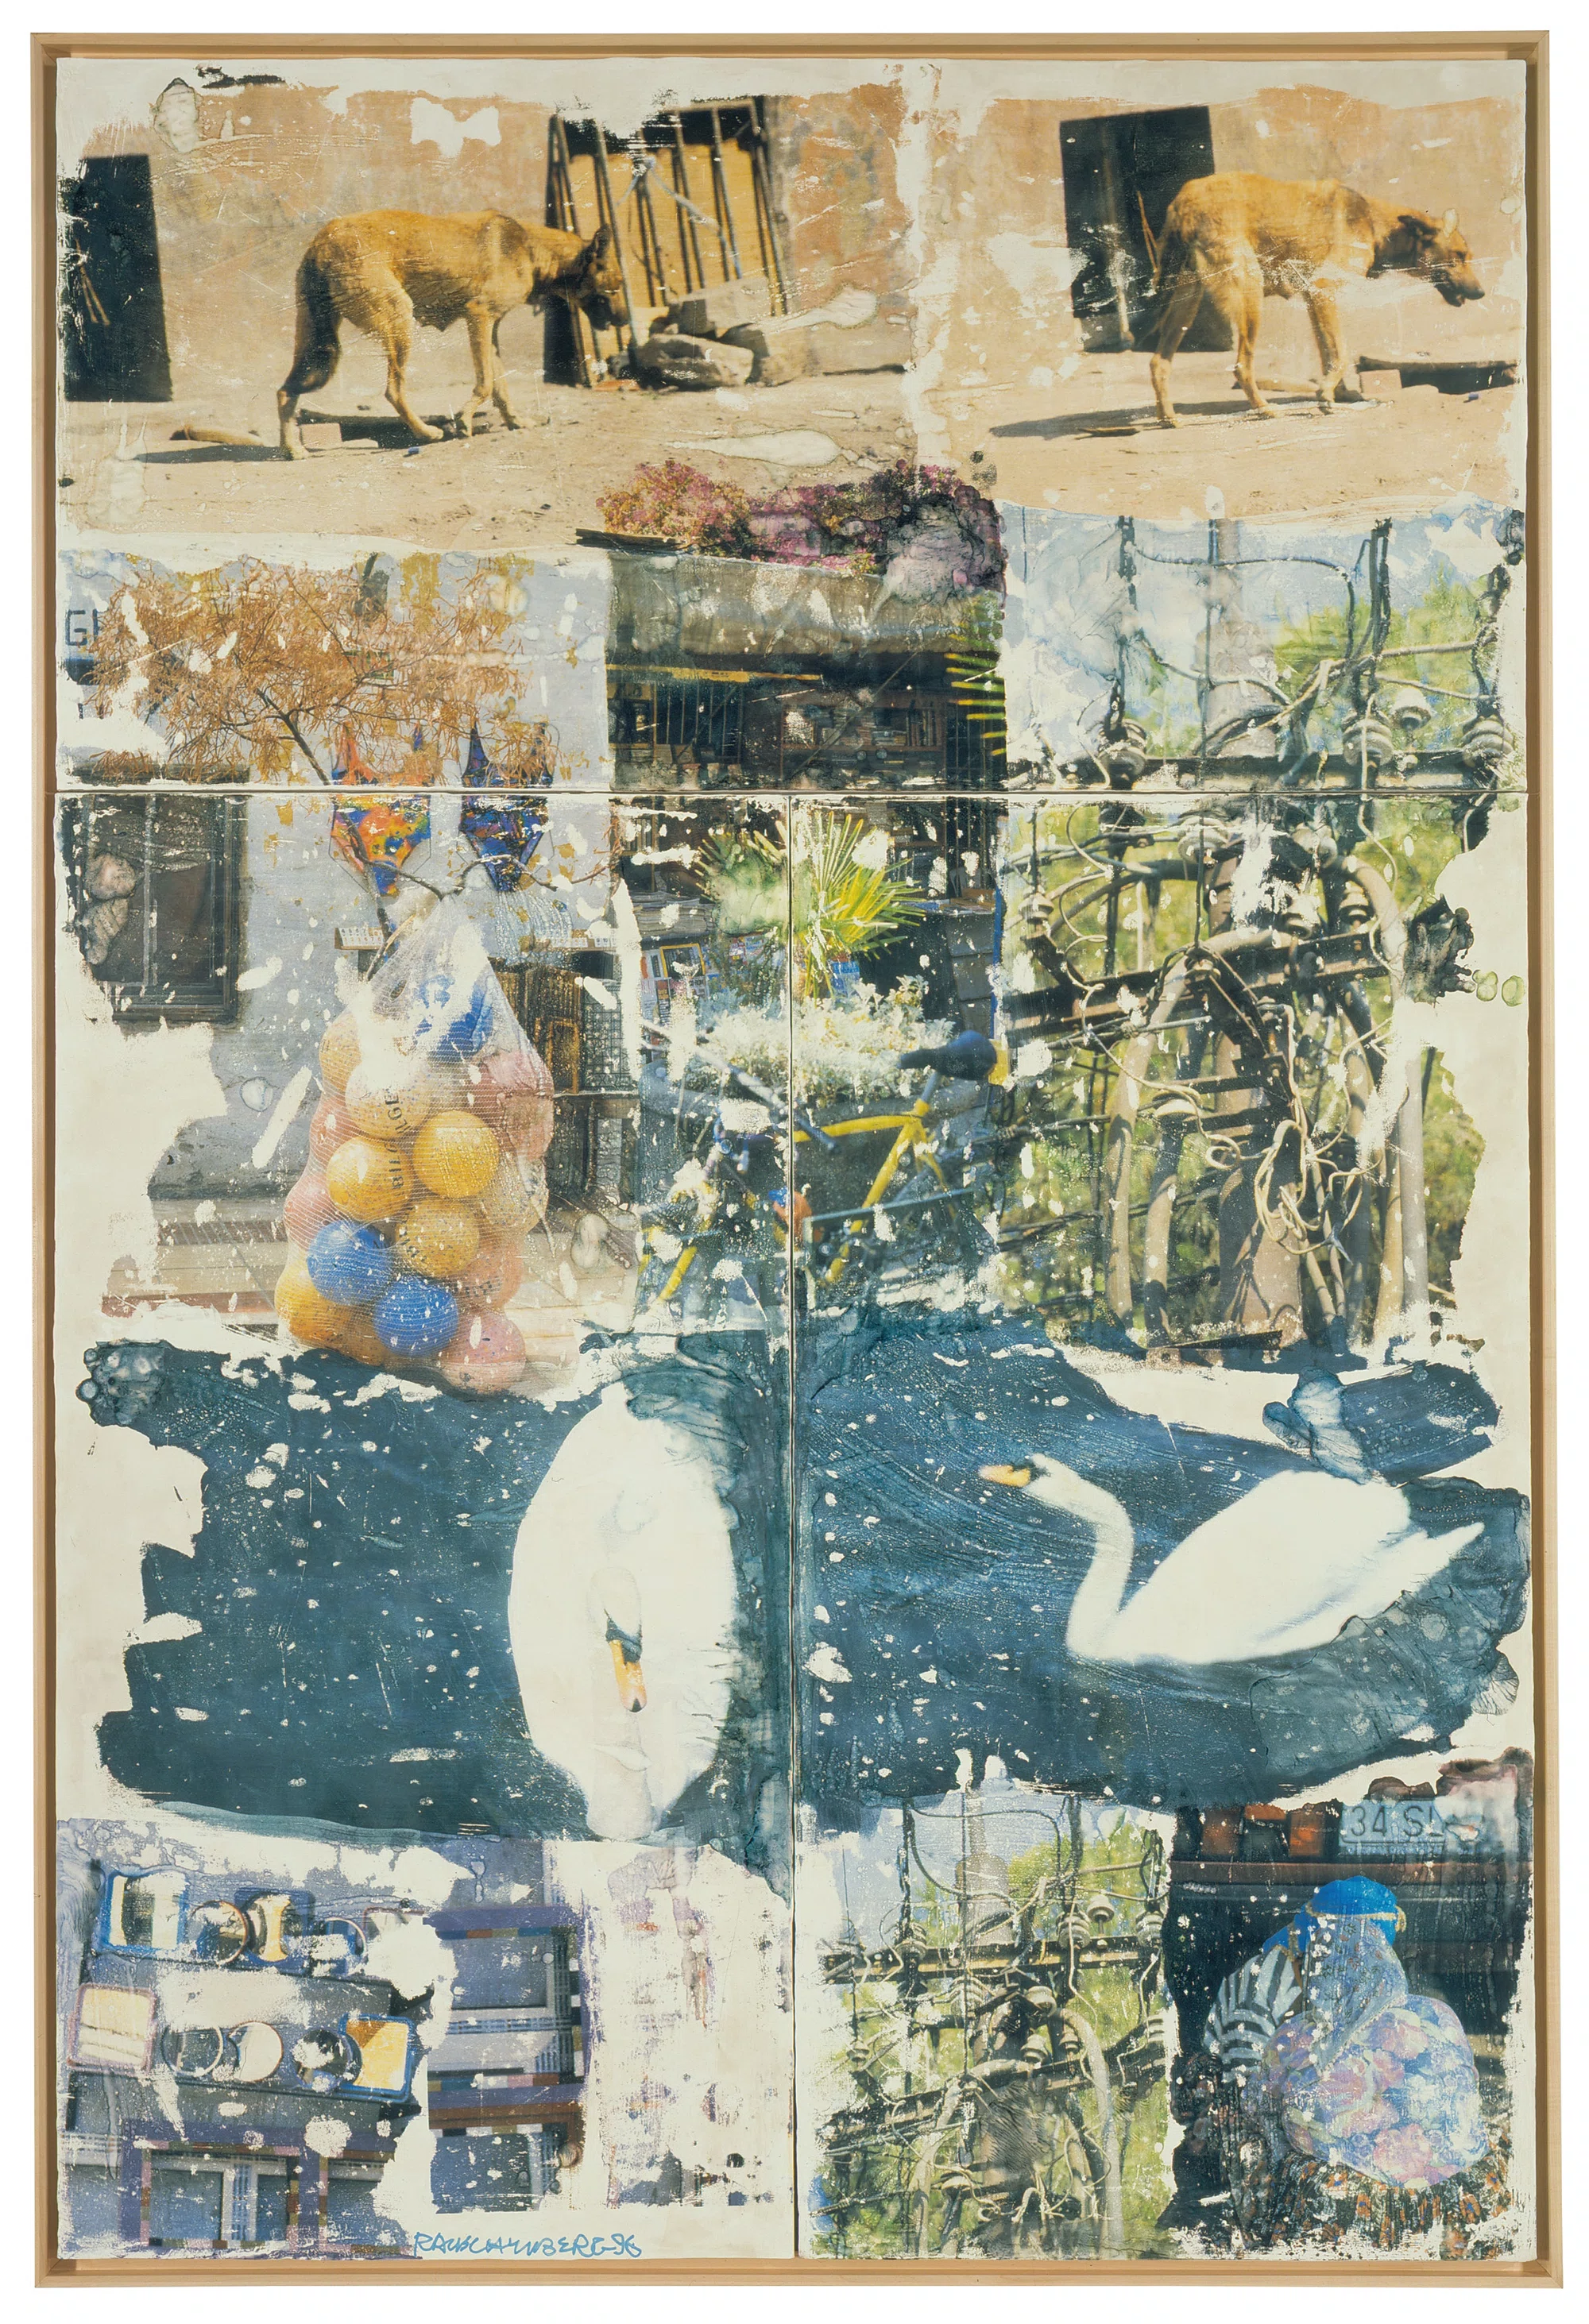 Lot - Josh Smith, (b. 1976), Turtle, 2019, Oil on panel, 48 H x